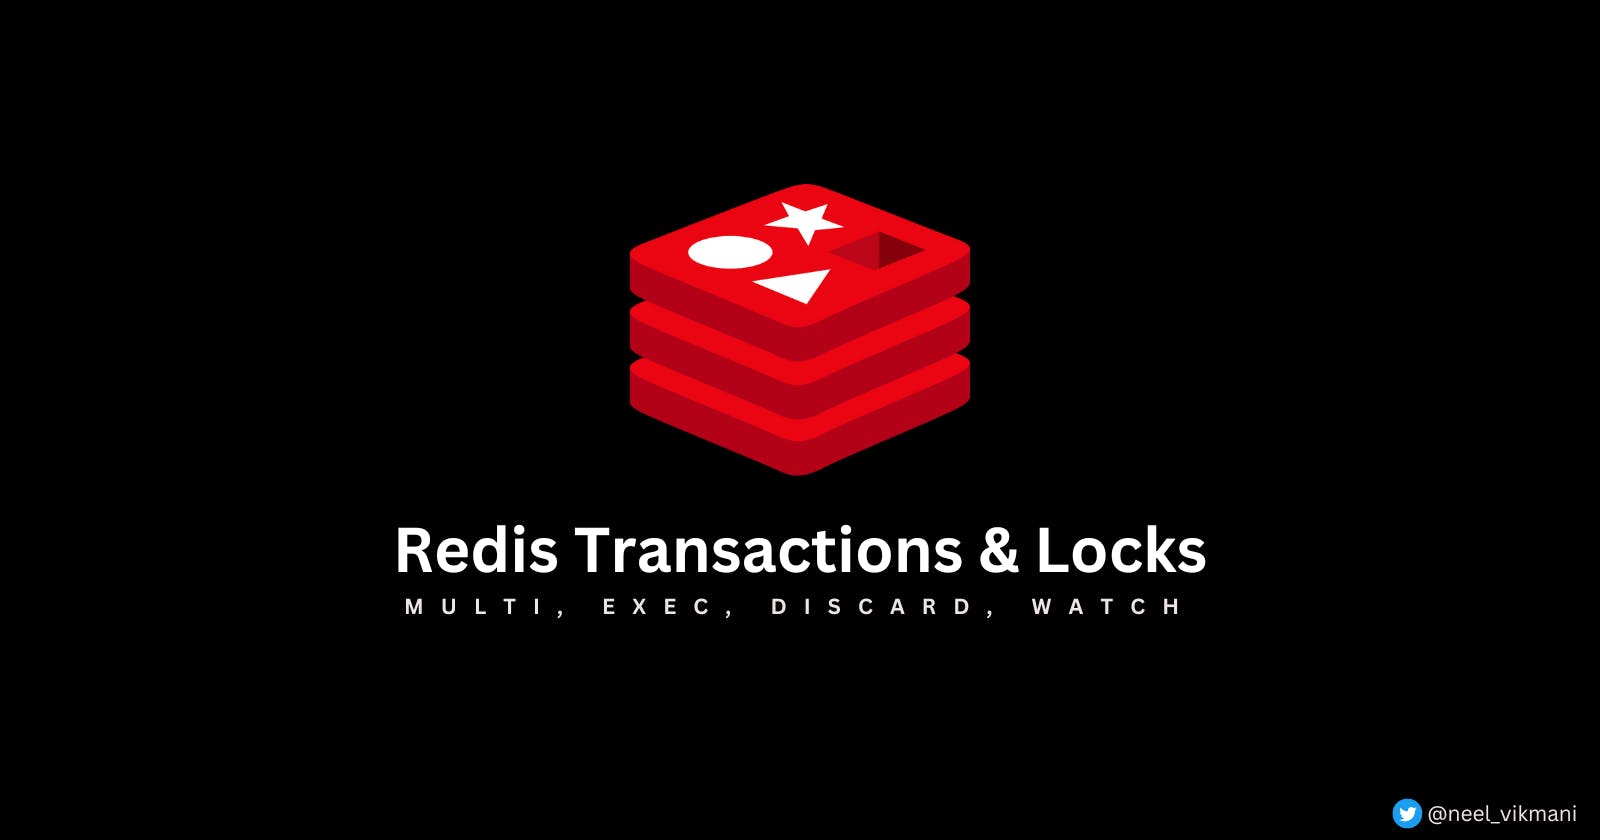 Transactions in Redis